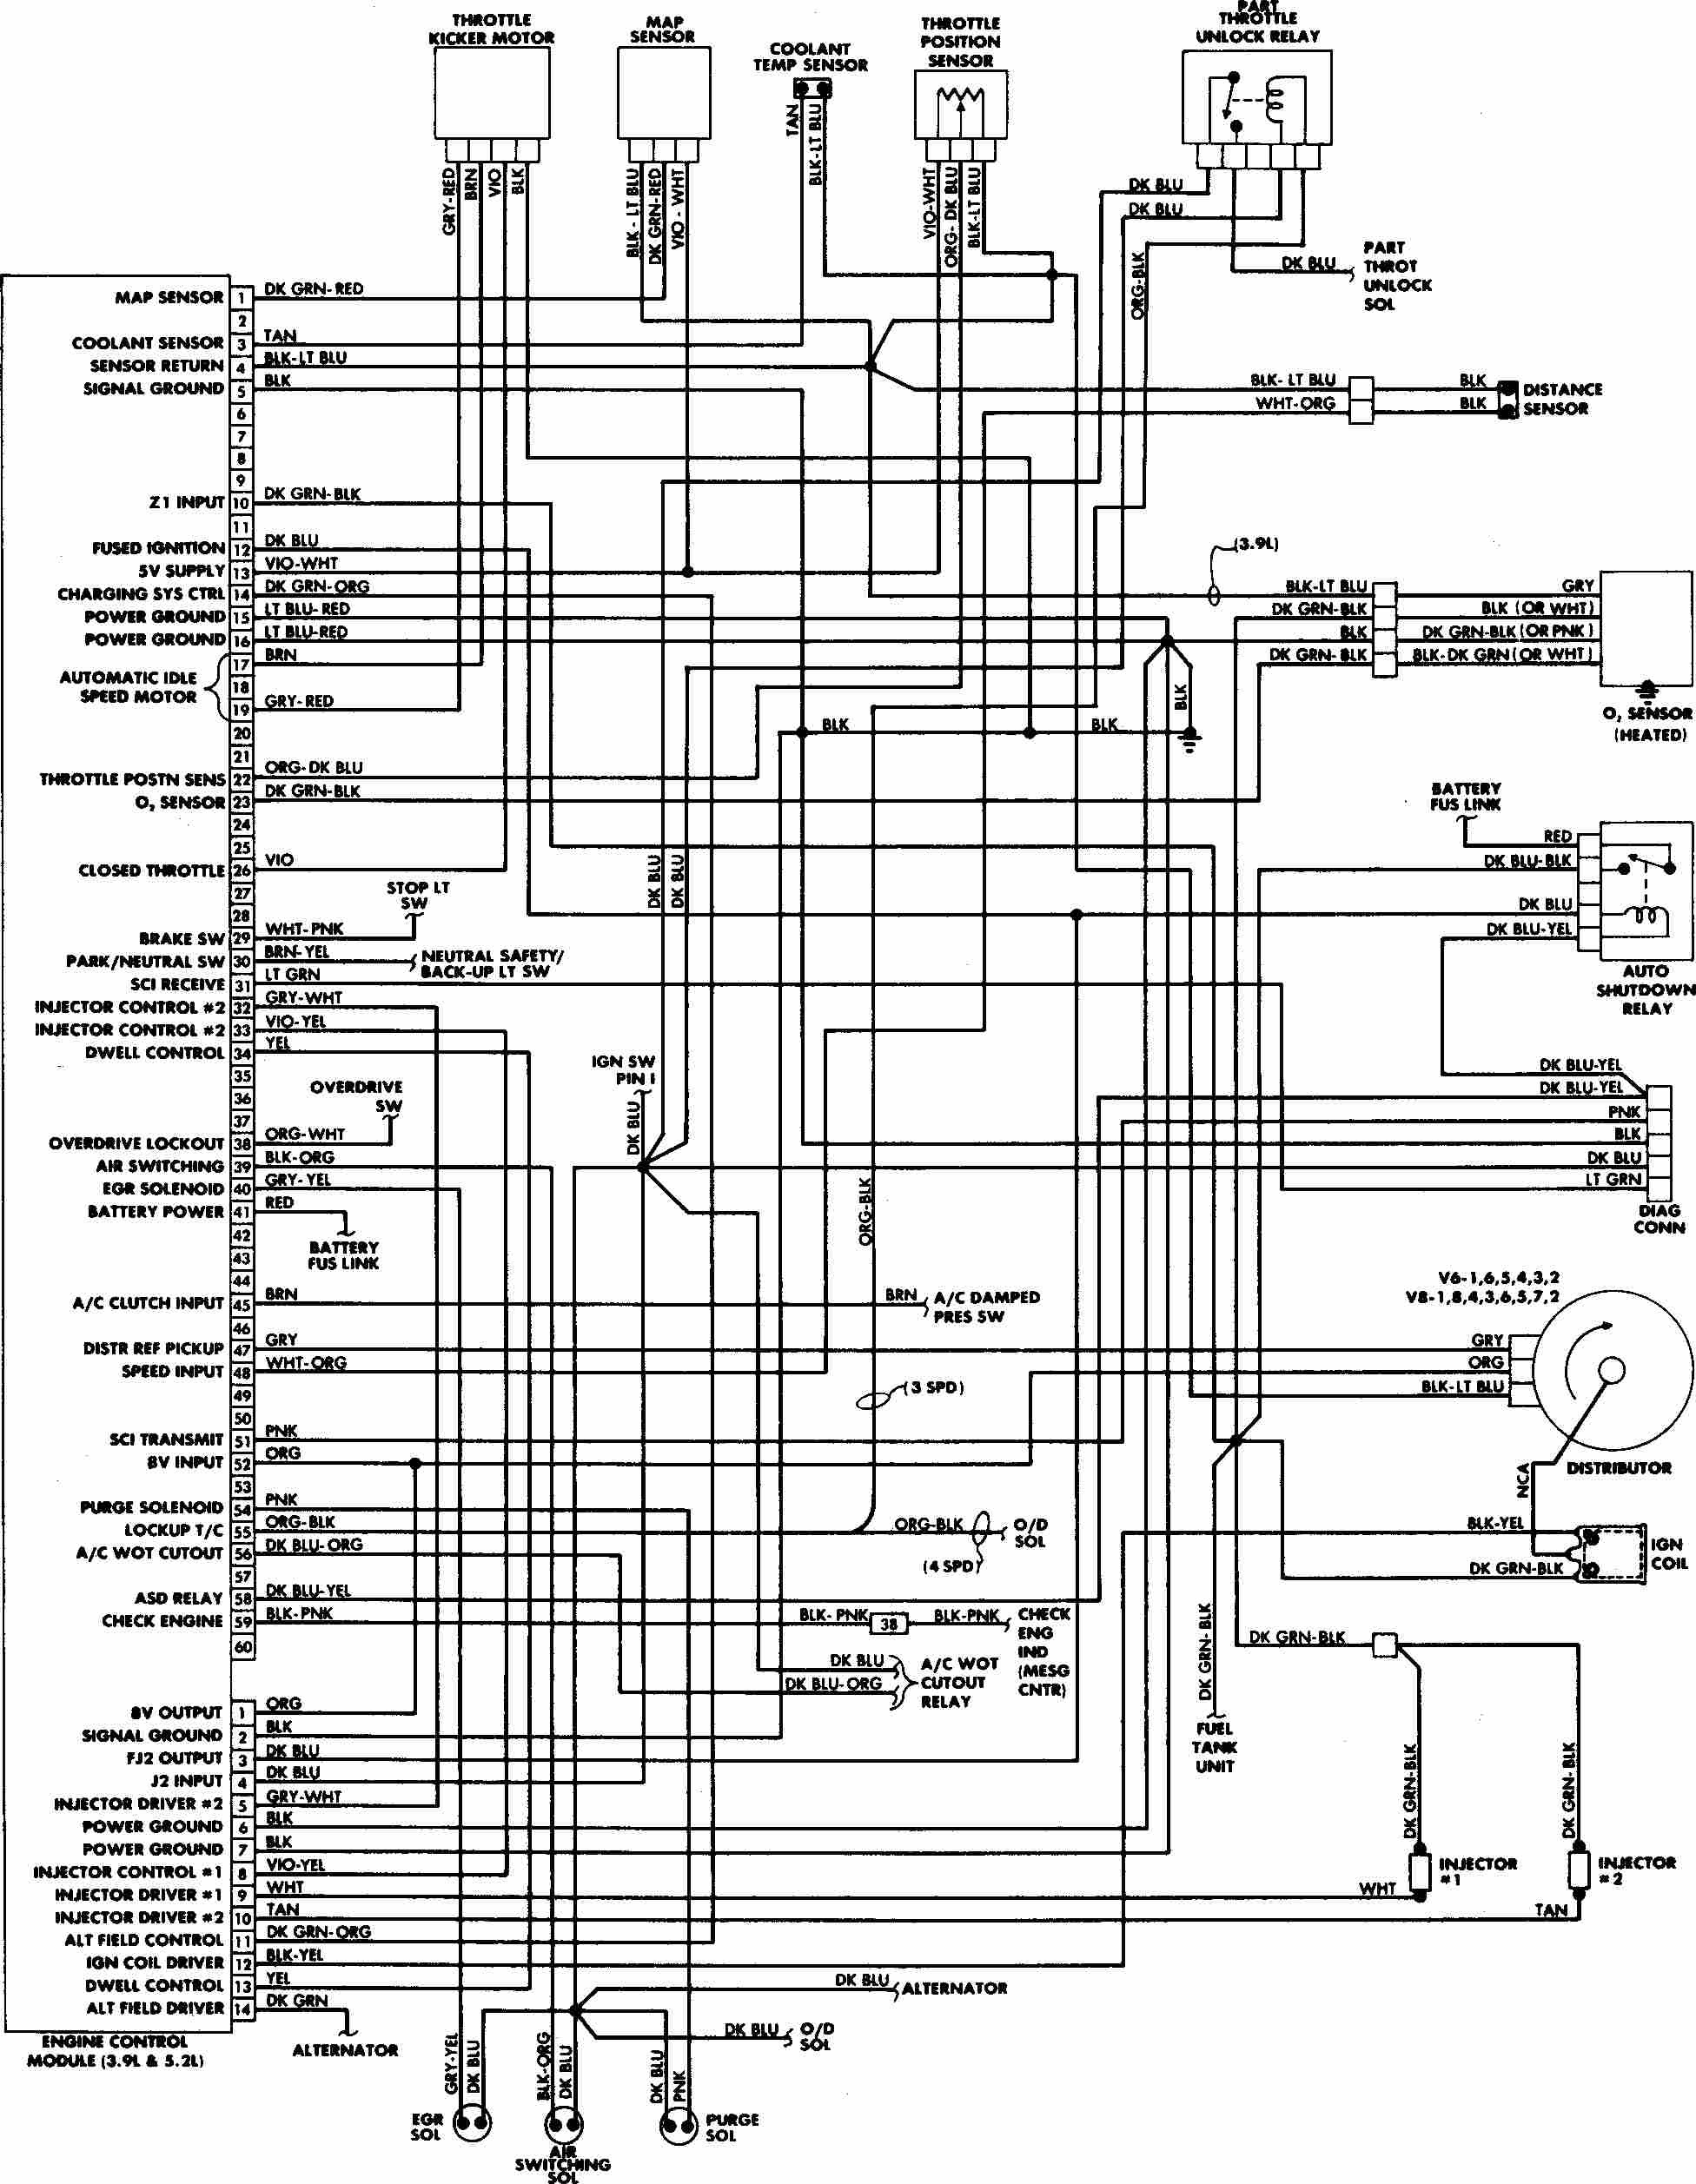 1973 mopar wiring harness truck diagram database 12 0 hastalavista me rh hastalavista me 1985 Dodge Truck Wiring Harness 1999 Dodge Truck Wiring Harness